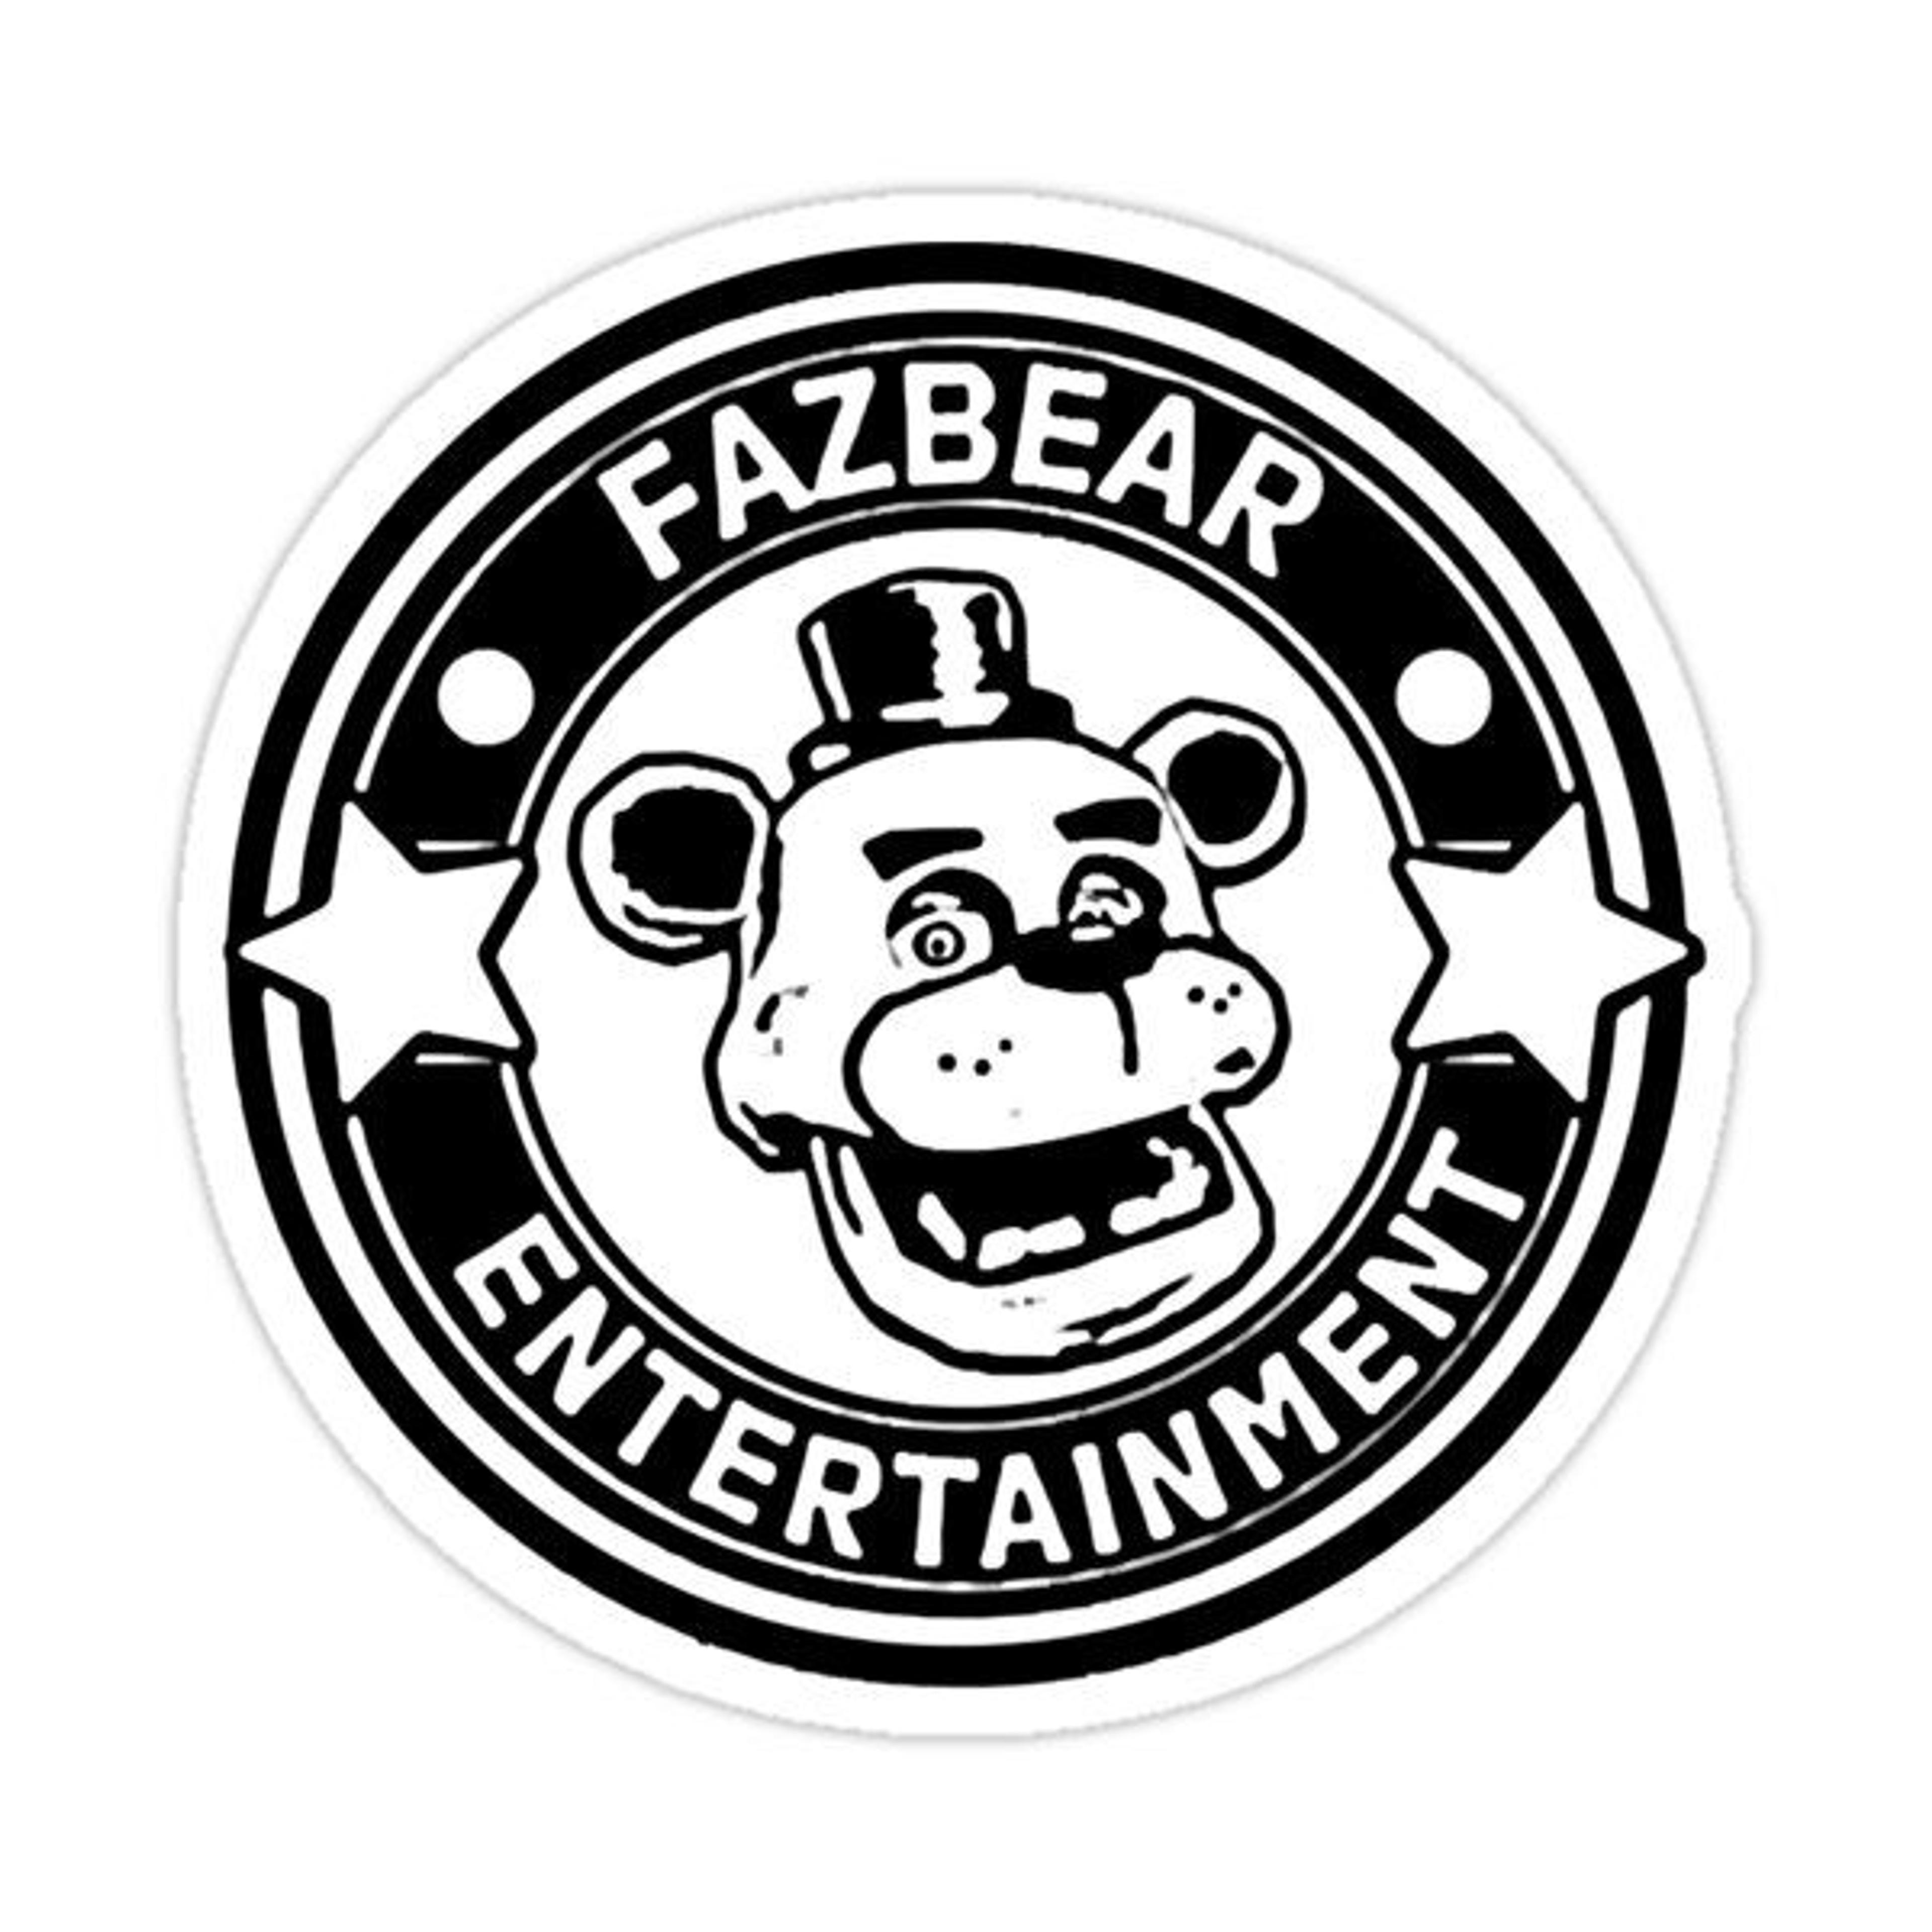 Fazbear Entertainment Logo Sticker by CynthiaAguilar